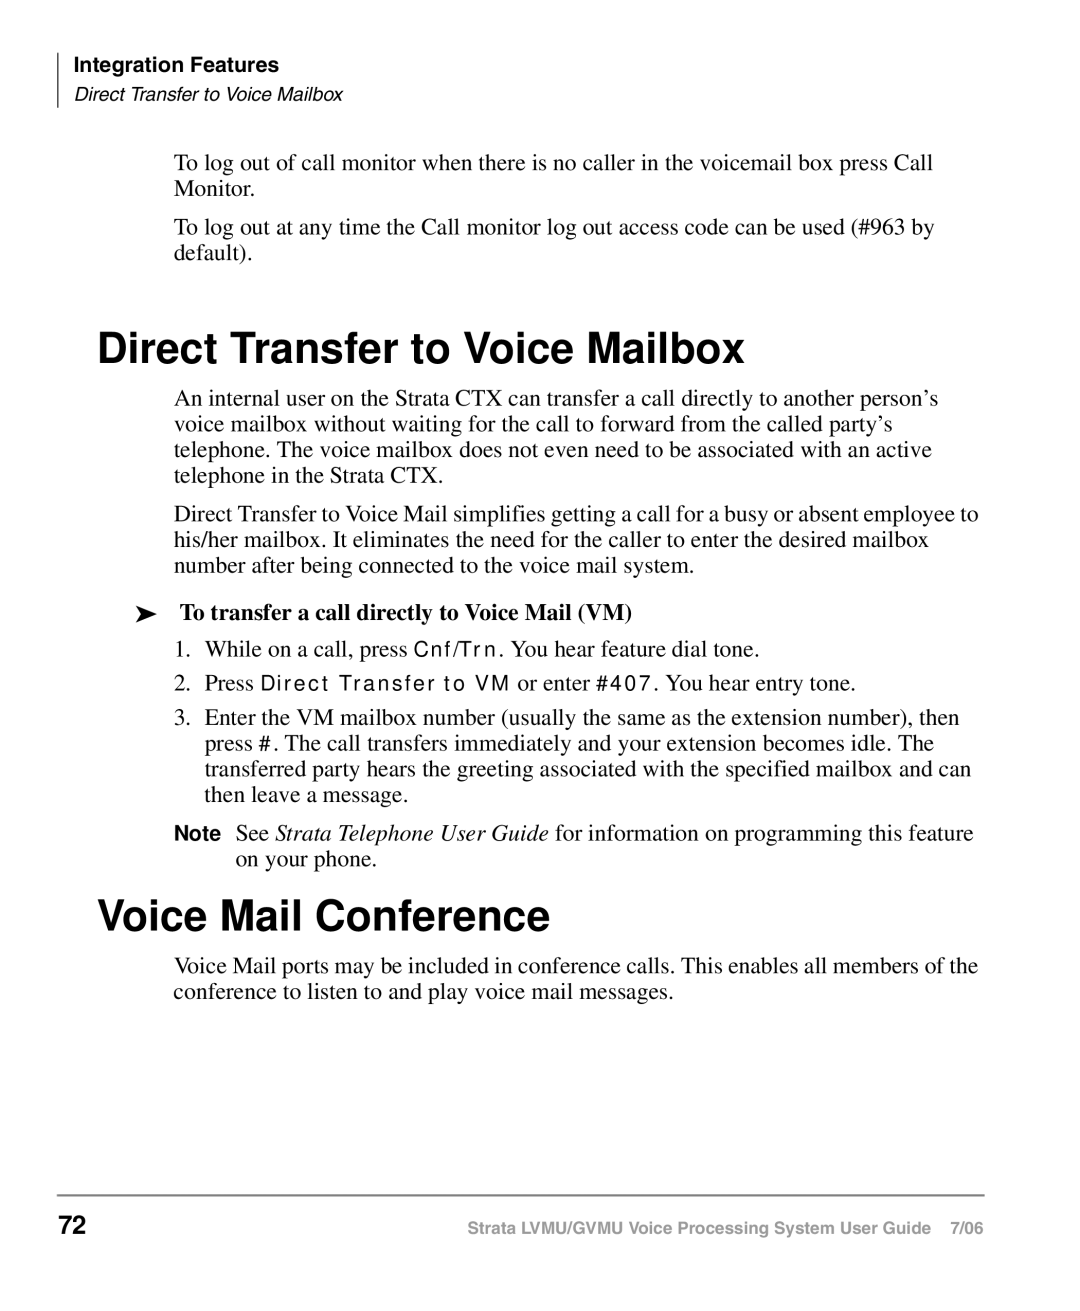 Toshiba GVMU/LVMU manual Direct Transfer to Voice Mailbox, Voice Mail Conference 